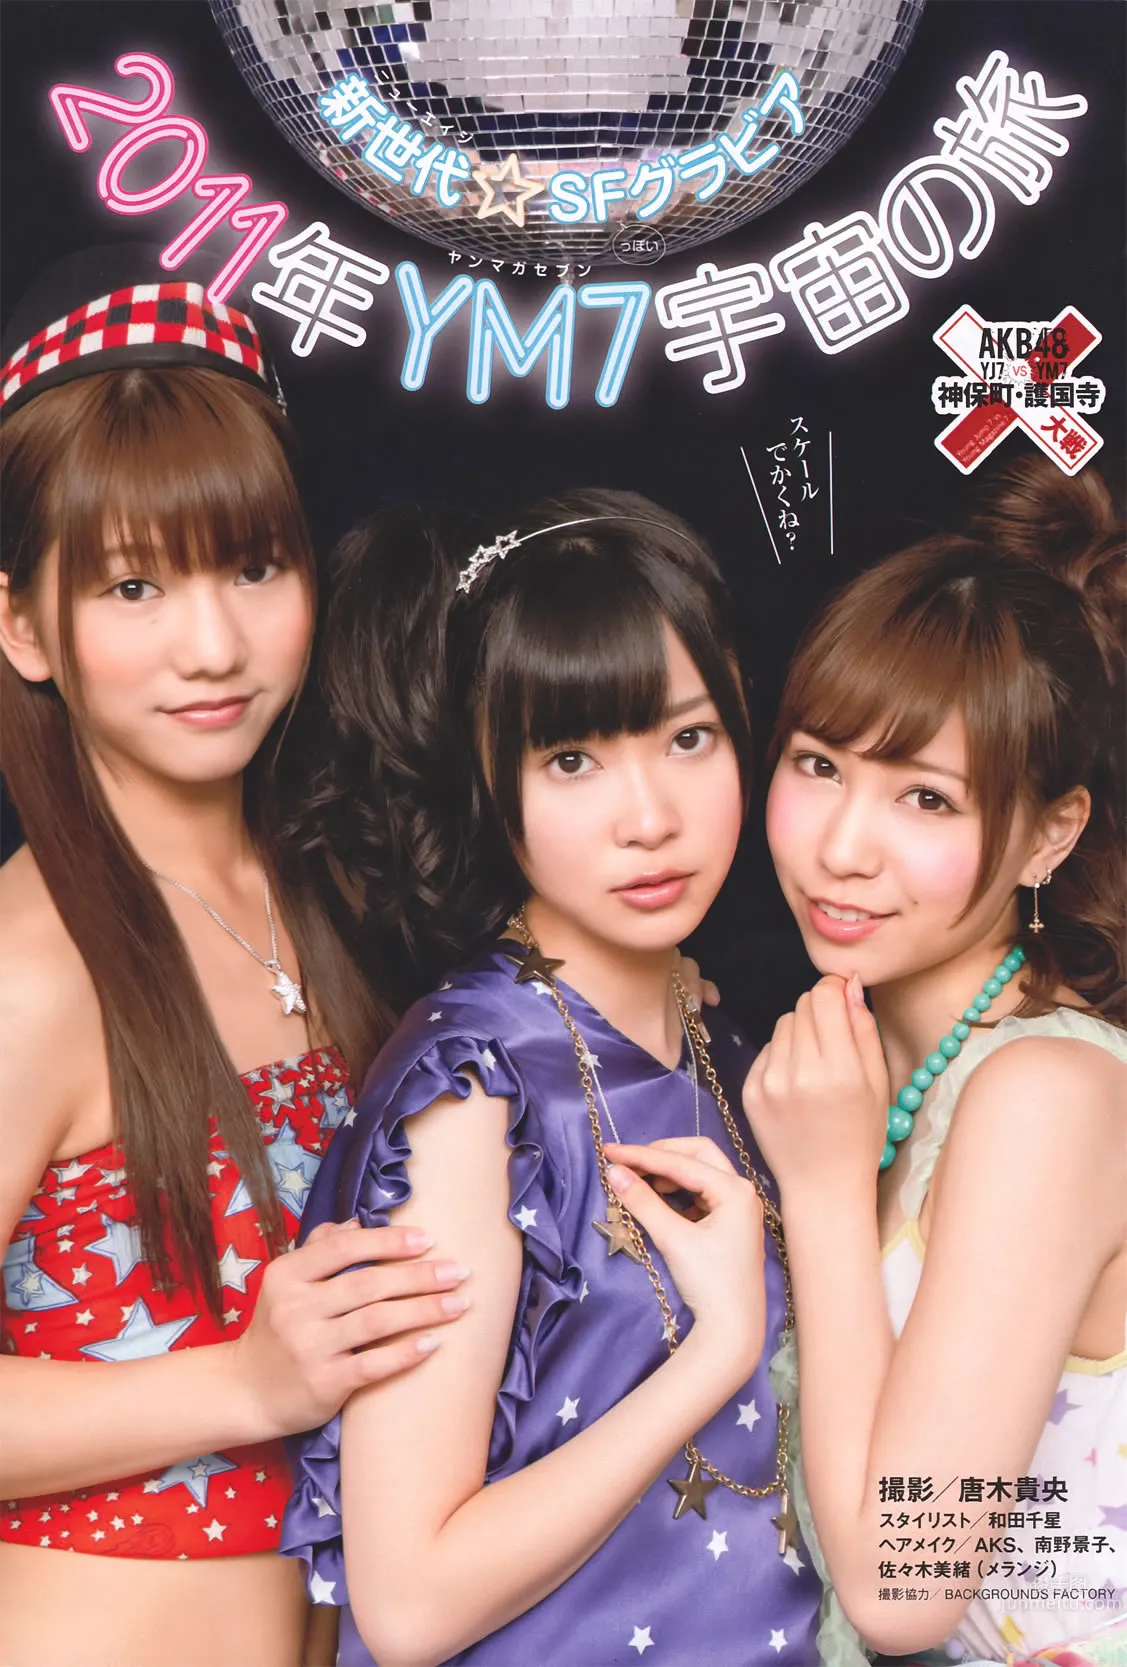 [Young Magazine] 2011 No.18 AKB48YM7 NMB48 吉木りさ_3